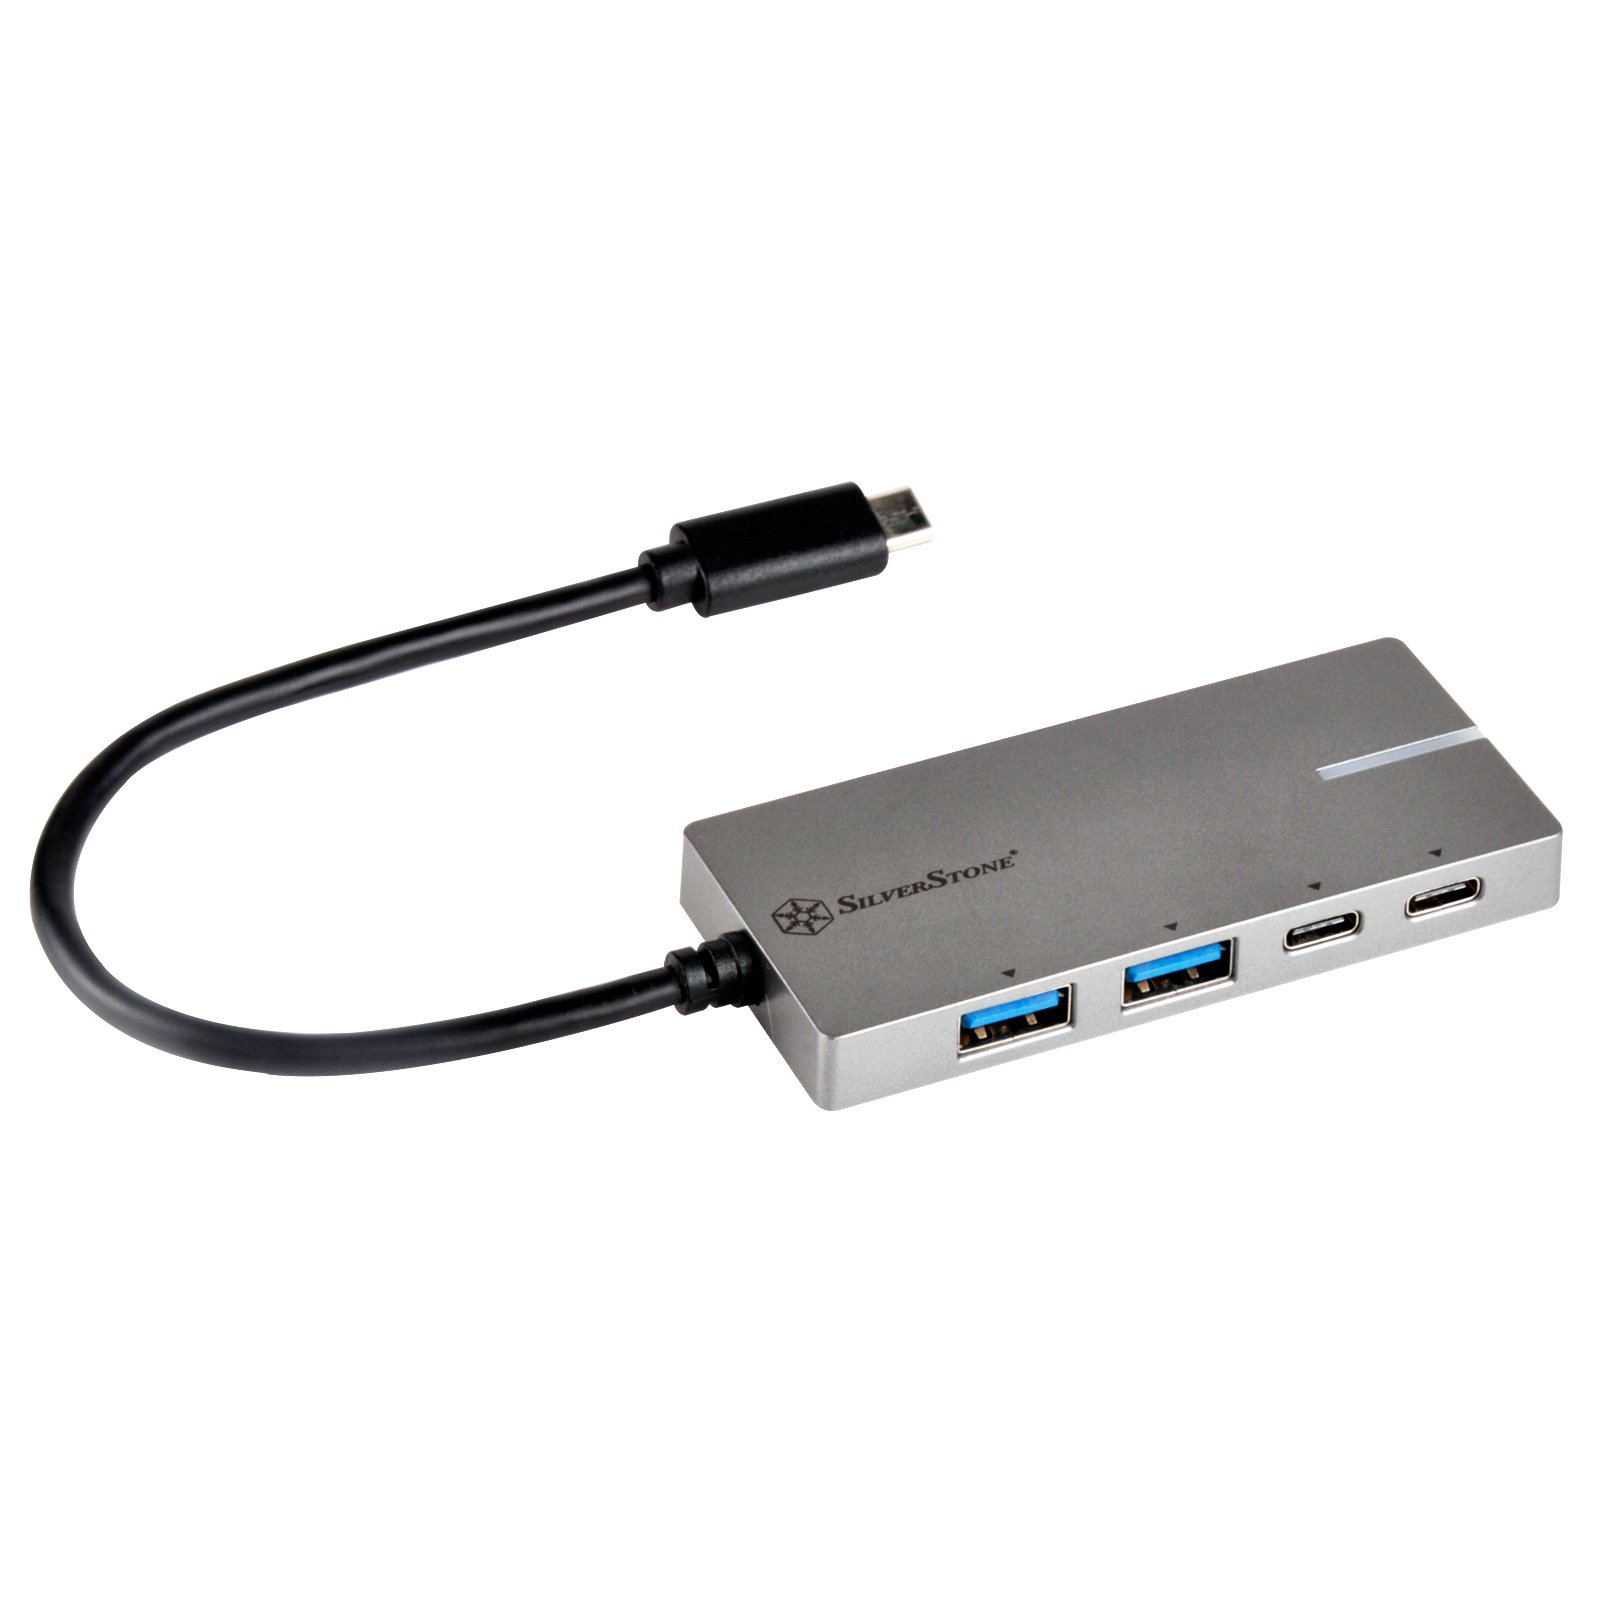 SilverStone SST-EP09C - USB Hub mit unabhängiger Betriebsanzeige LED, USB 3.1 Typ C (Gen 1) auf 2x Typ A and 2x Typ C ports